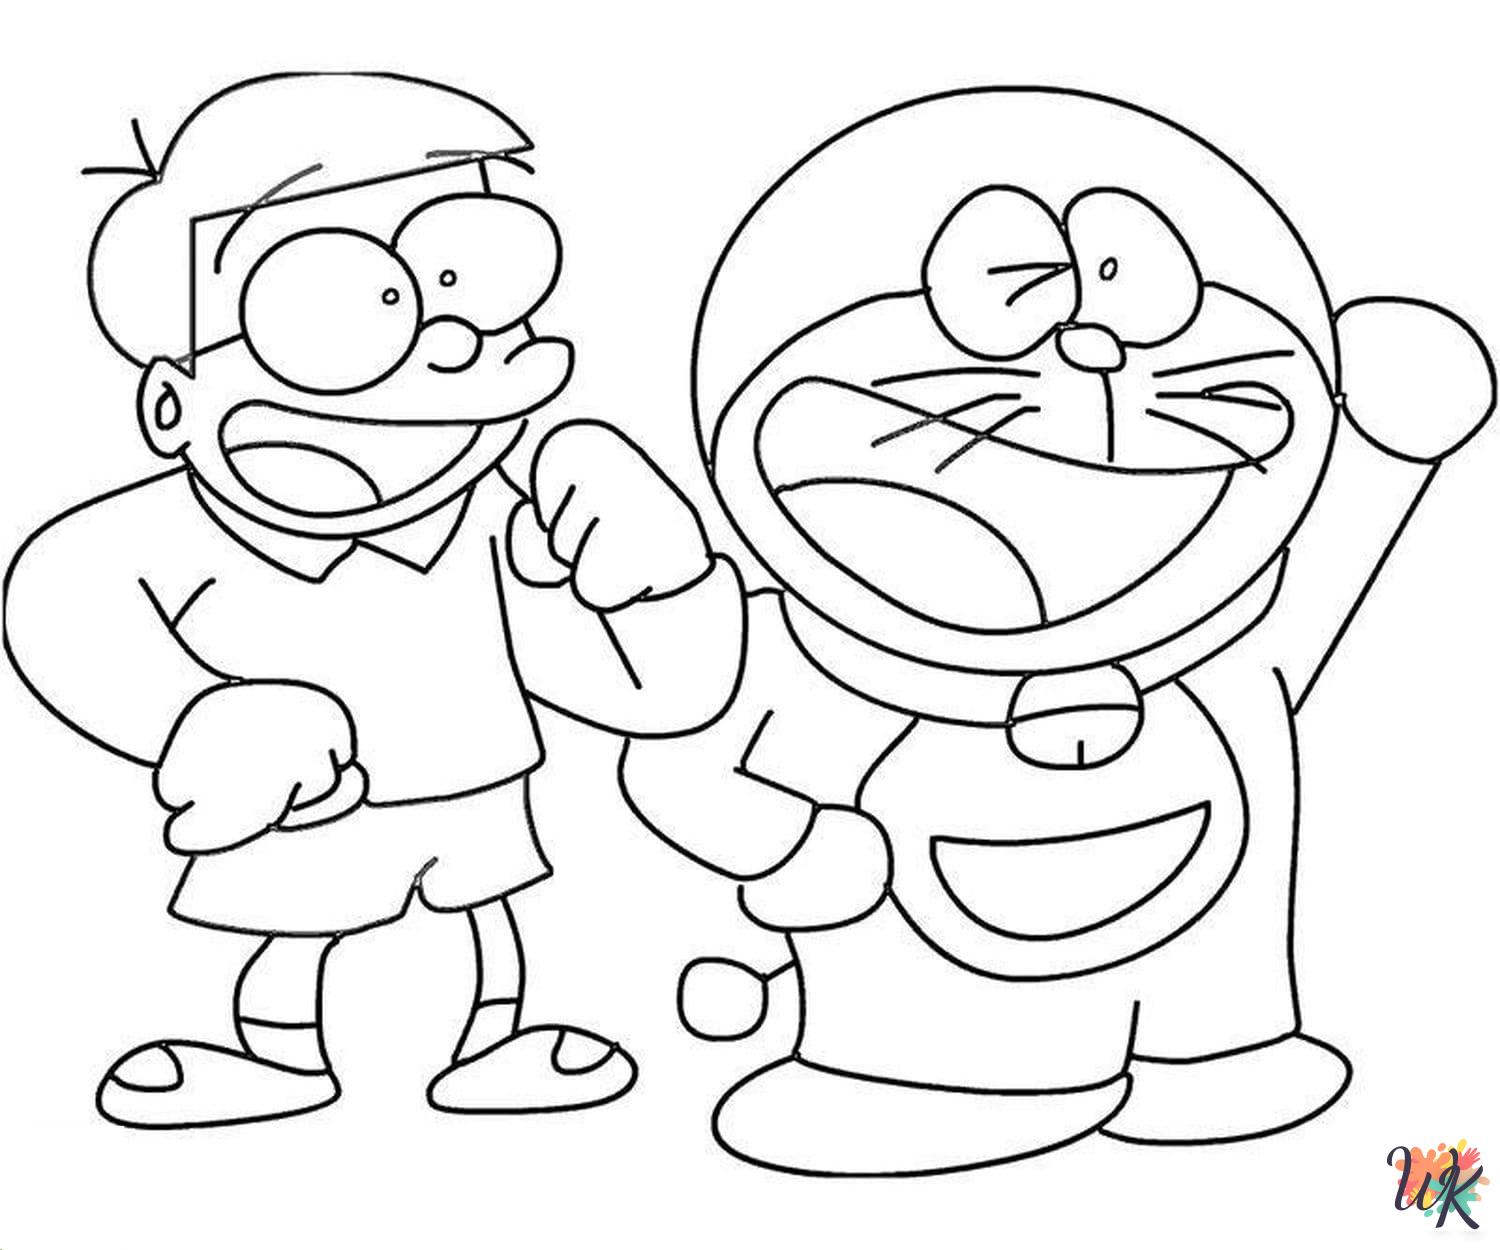 Doraemon coloring pages printable 1